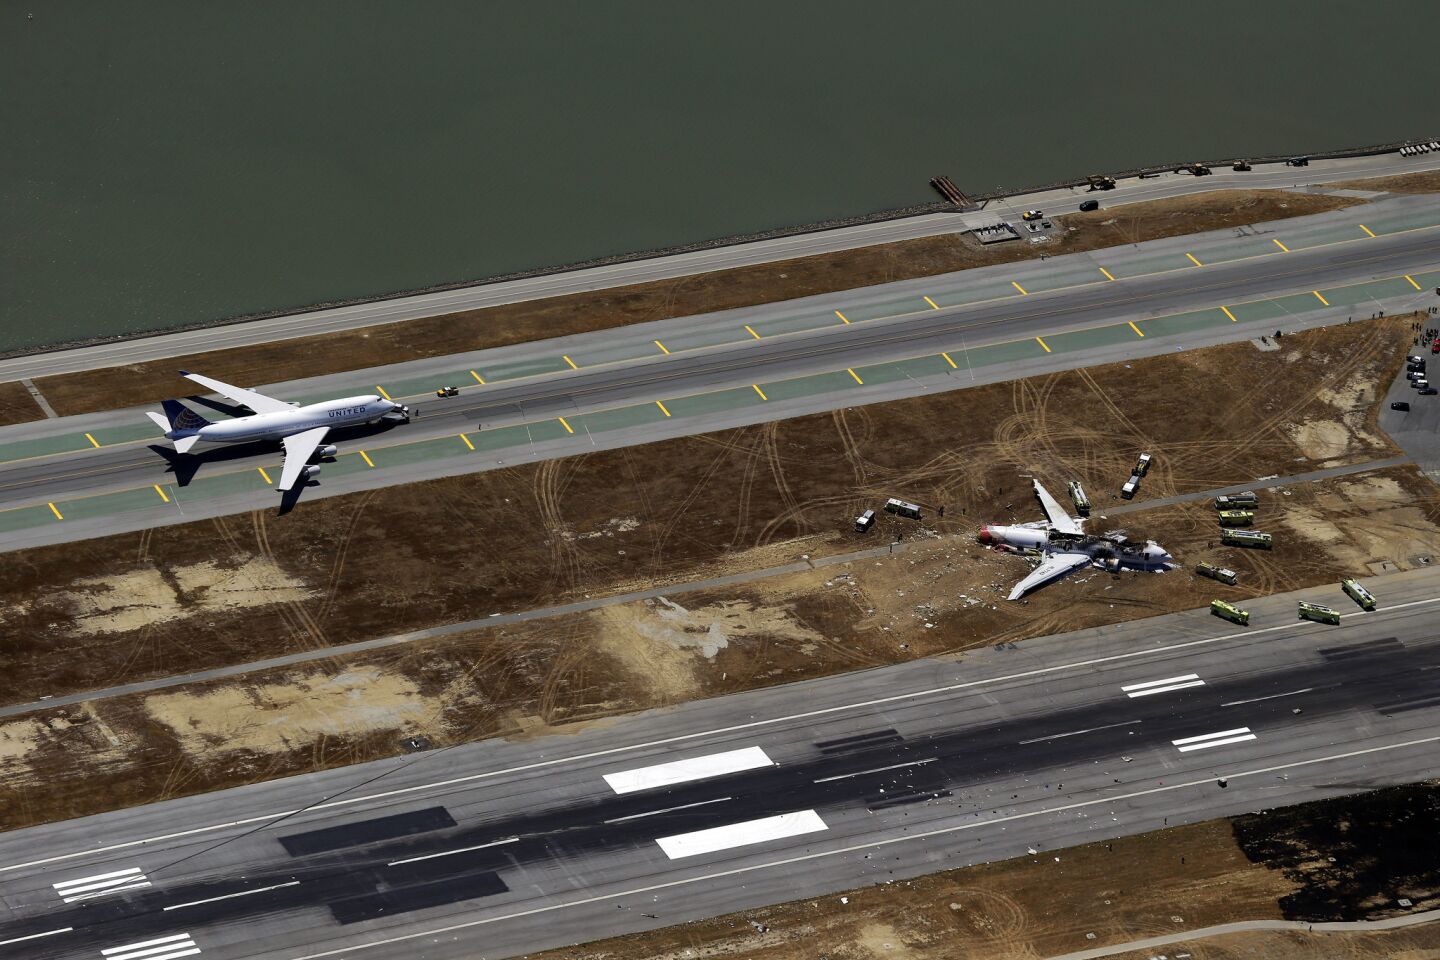 The crash site of Asiana Flight 214 at San Francisco International Airport in San Francisco.